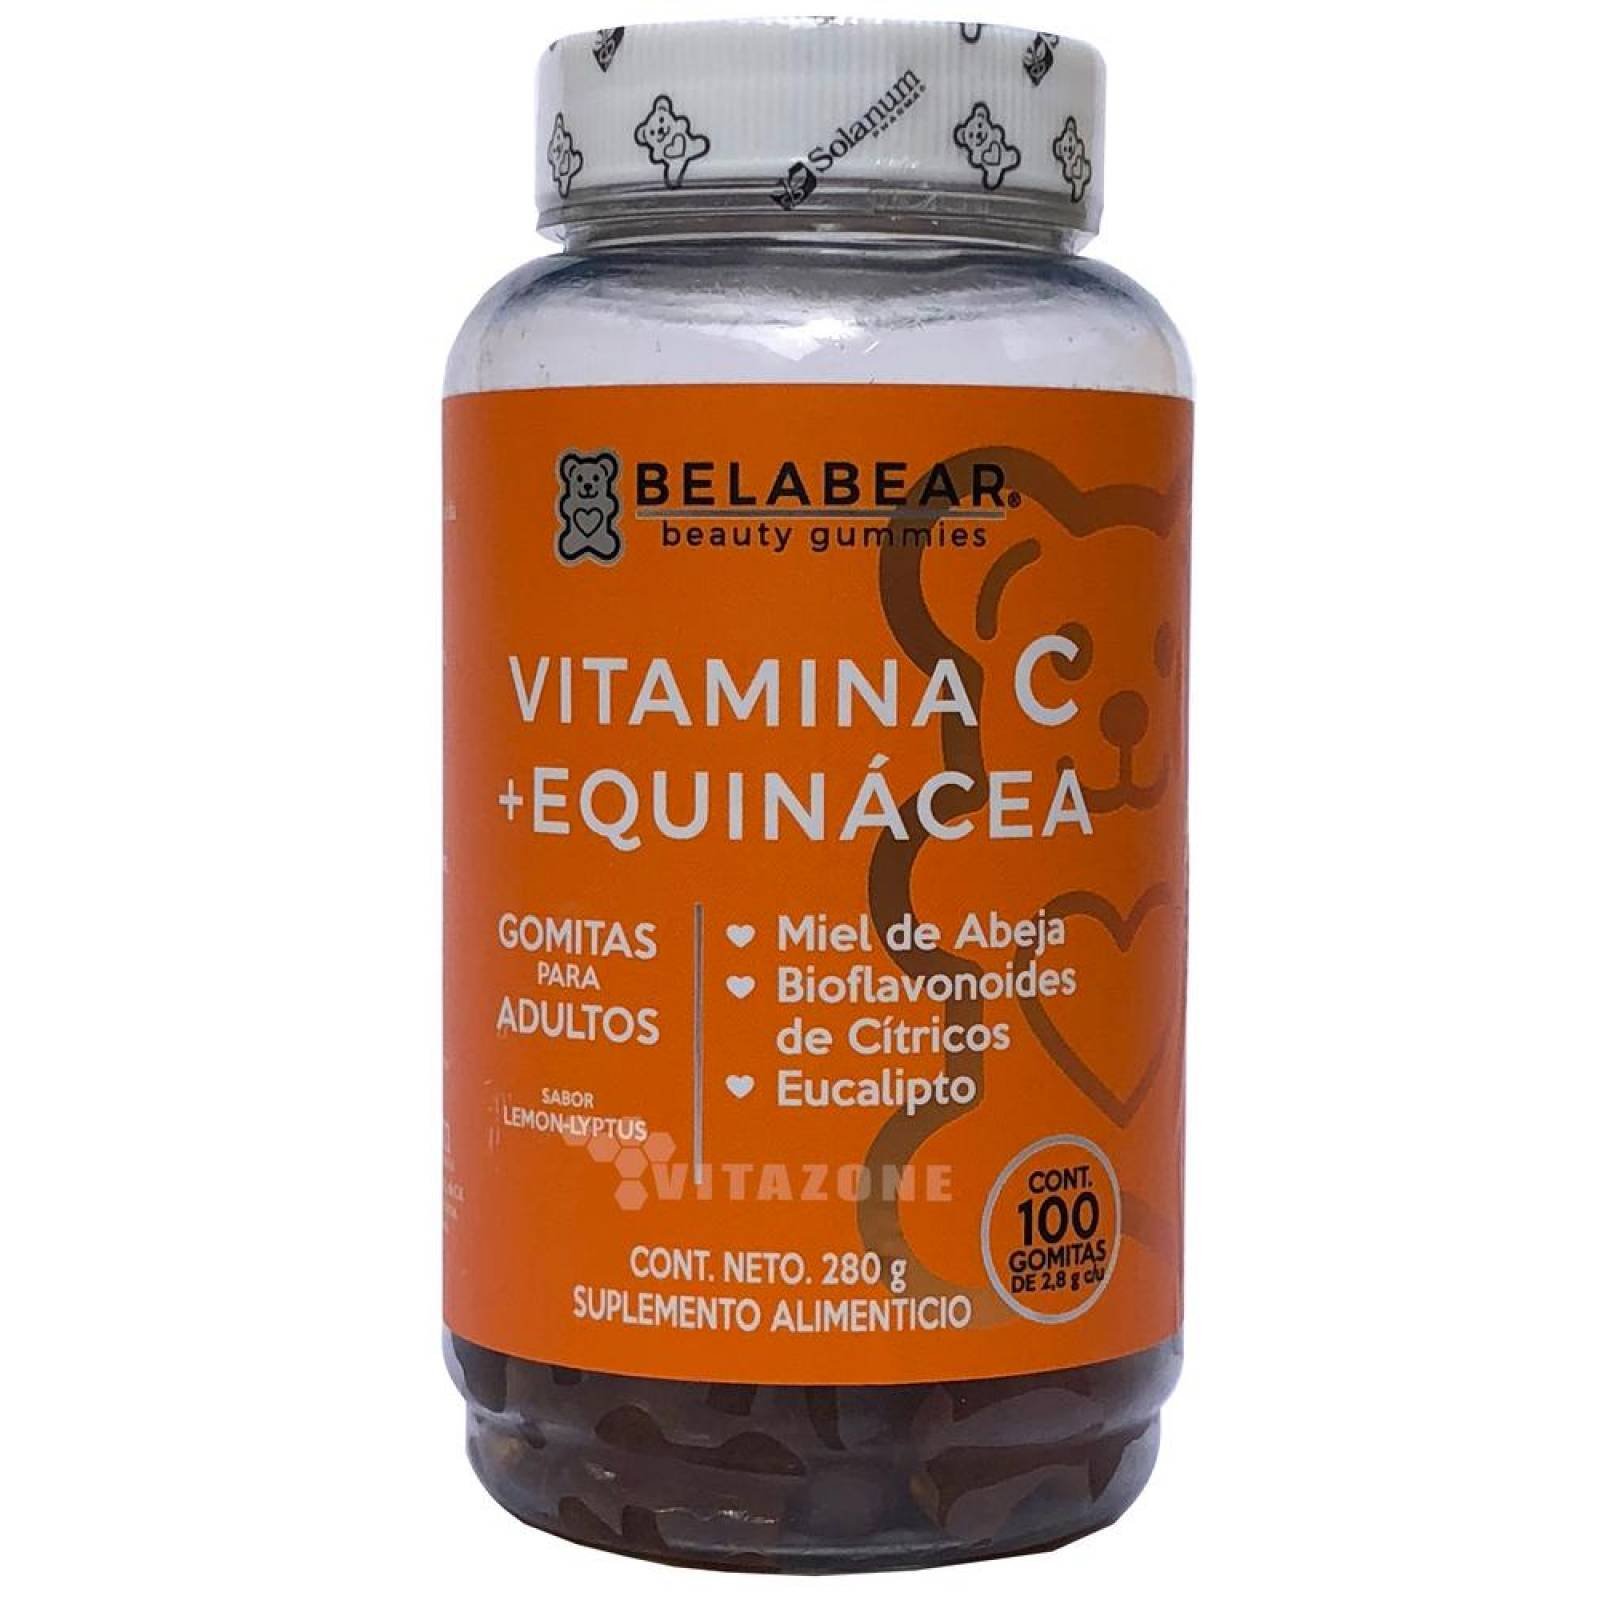 Vitamina C + Equinácea 100 gomitas Belabear Sabor Lemon-lyptus 